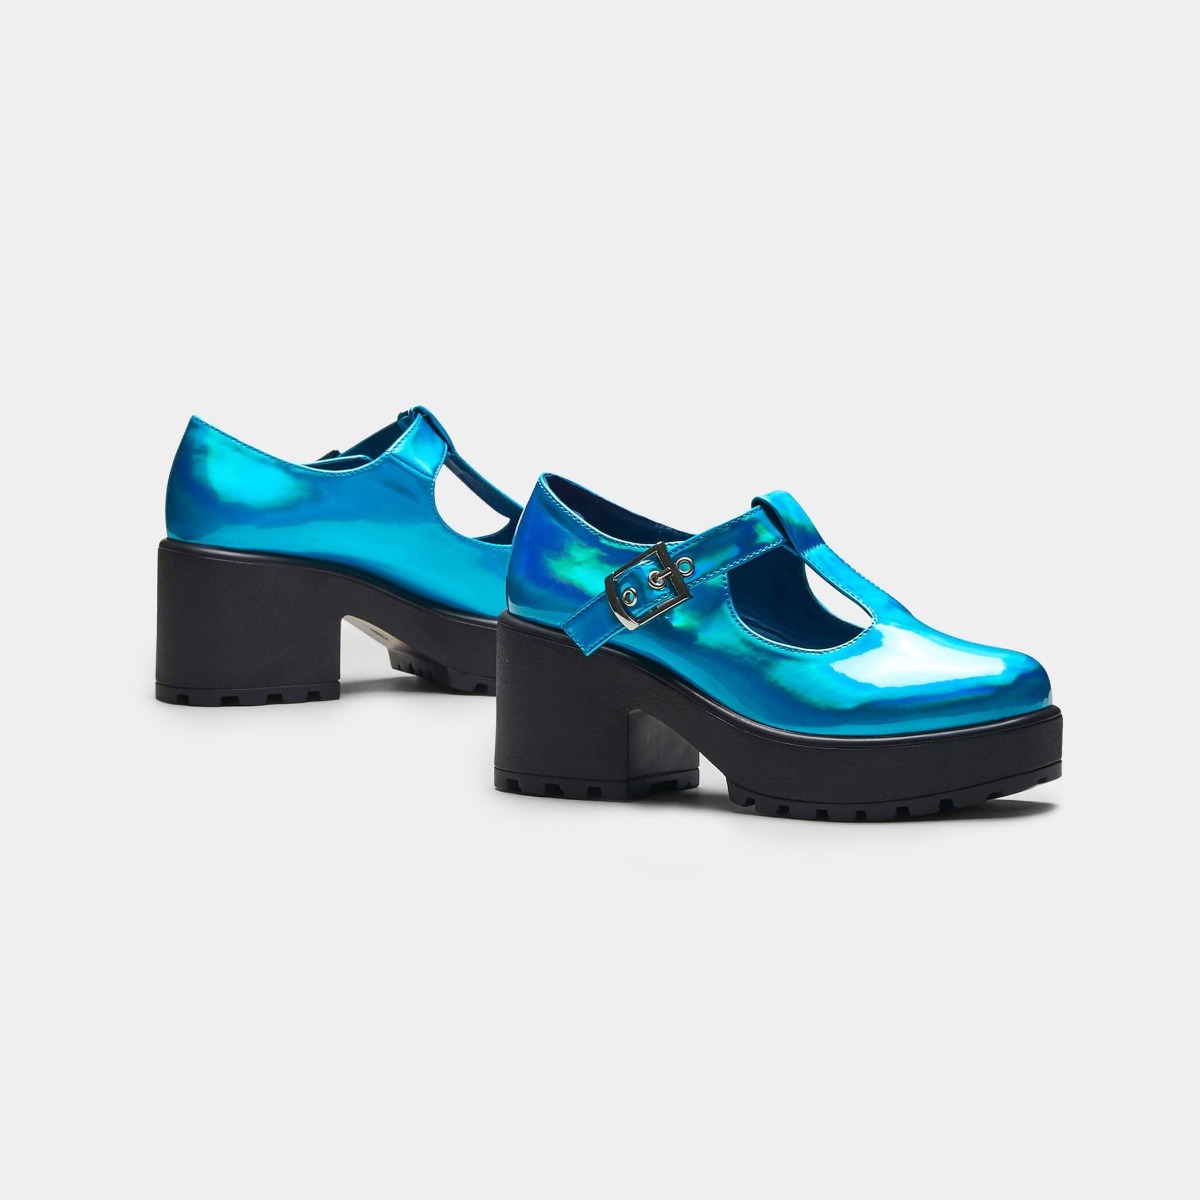 kfnd35mblubbbb_chaussures-mary-janes-lolita-glam-rock-sai-bleu-metallique